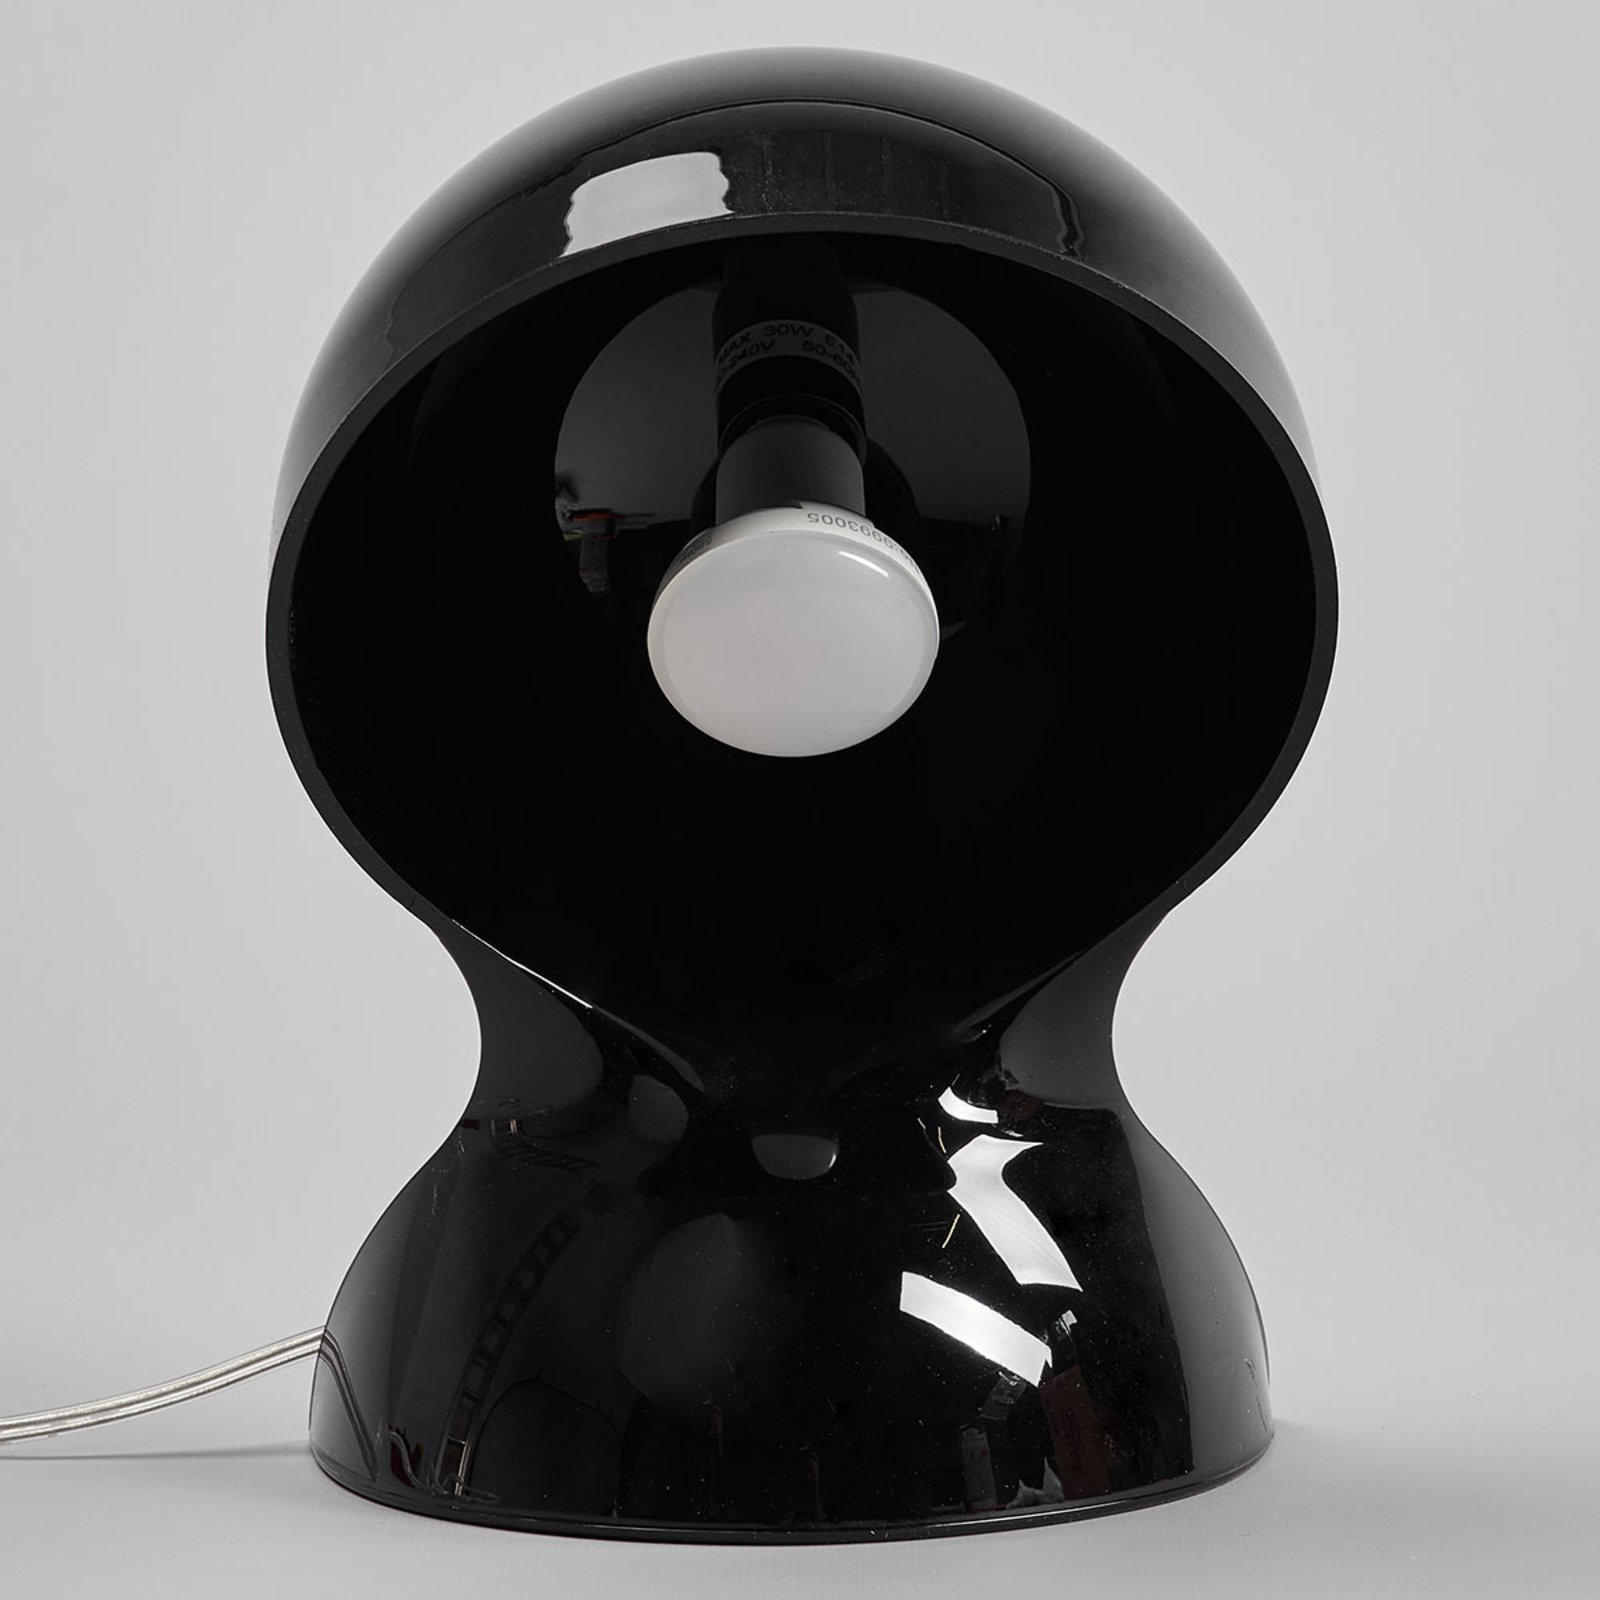 Artemide Dalù designer table lamp in black